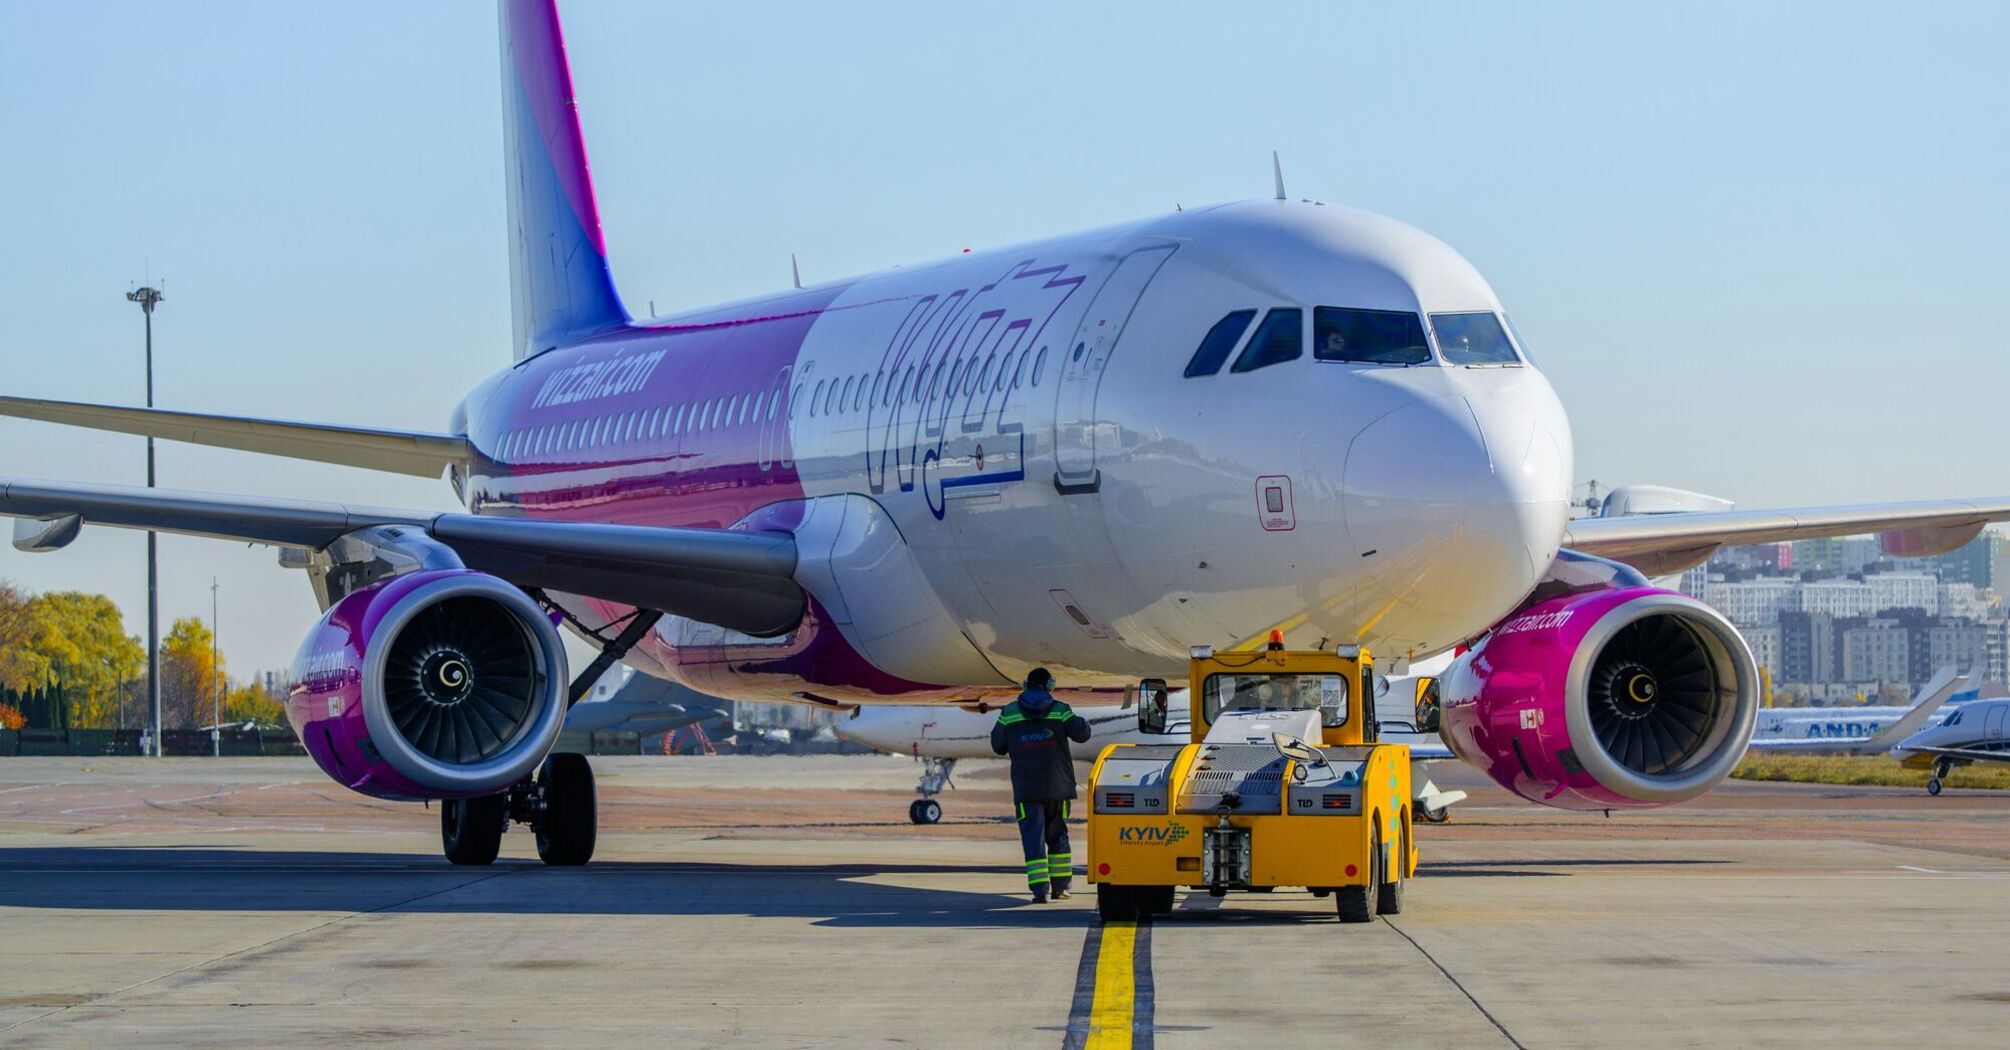 WizzAir's A320 pushing back in Kyiv Zhulyany airport